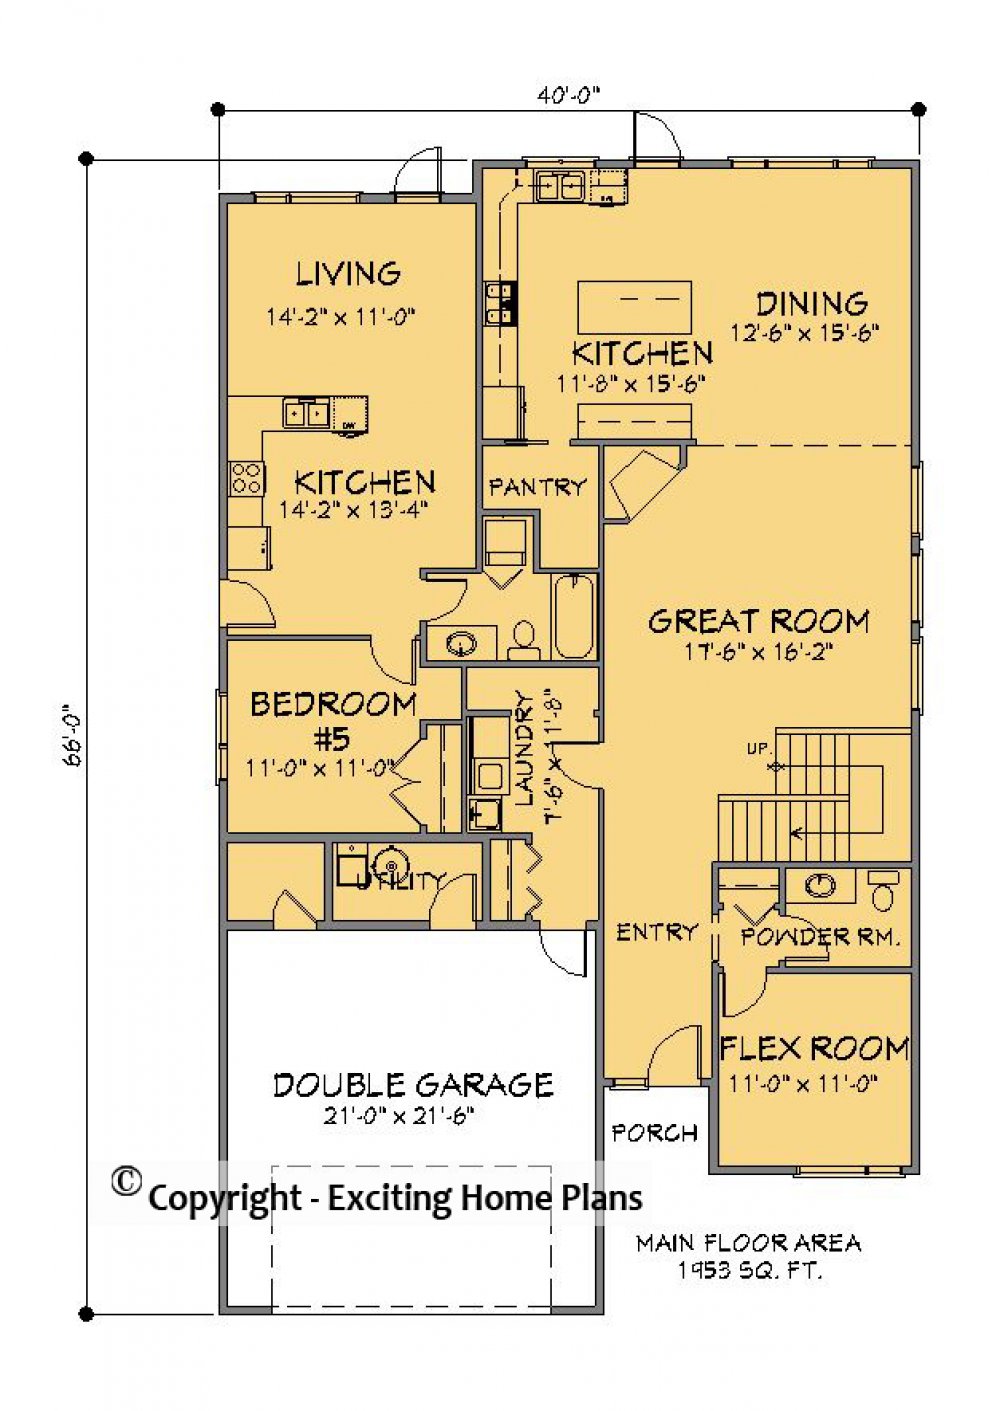 House Plan E1713-10M Main Floor Plan